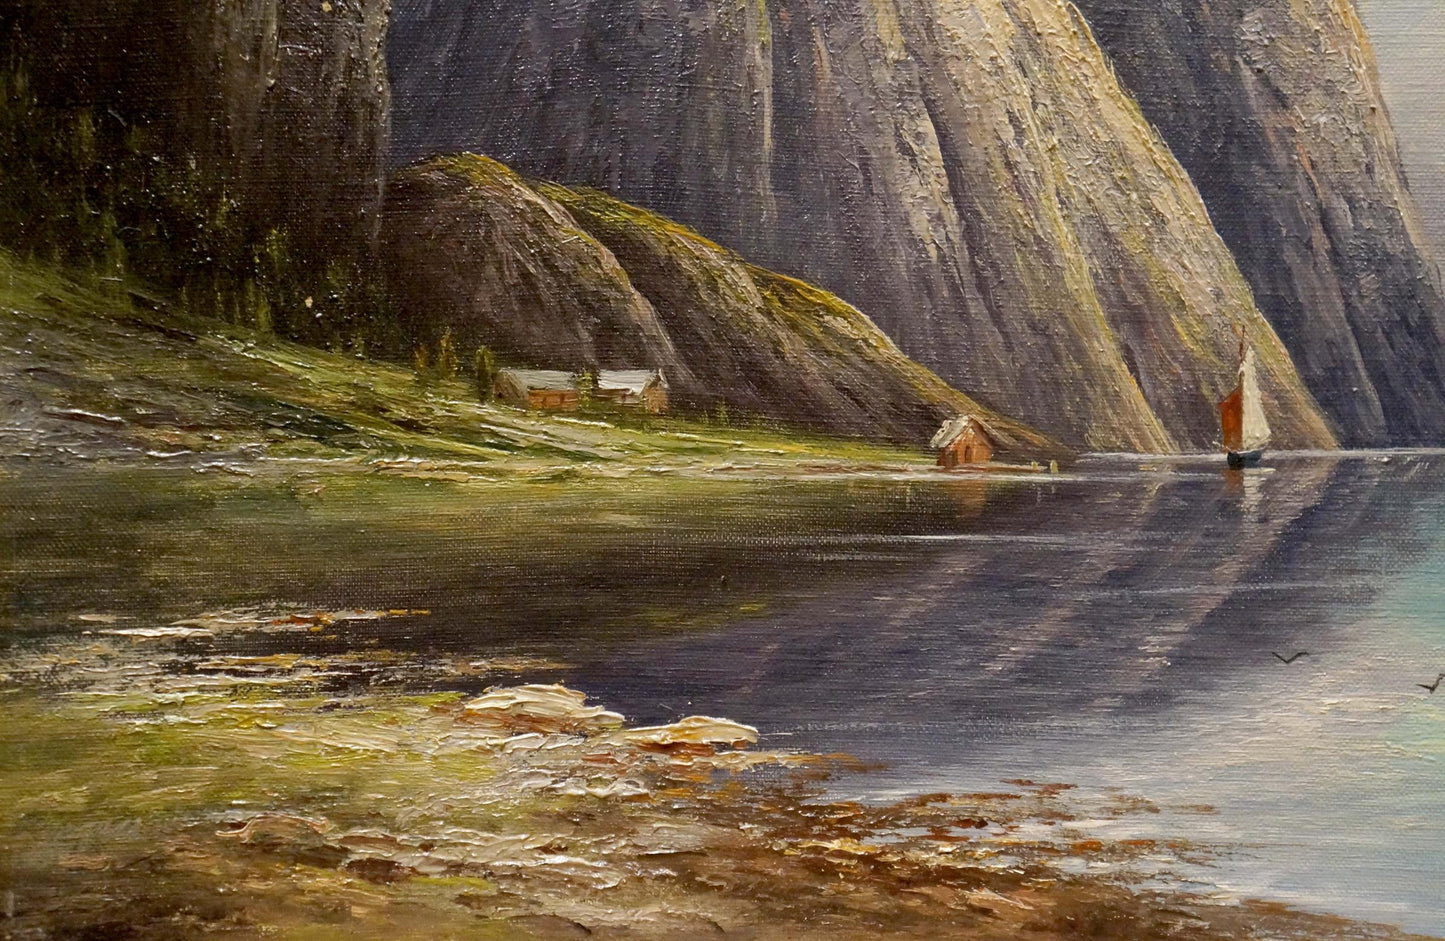 Captivating landscape depicted in oil paint